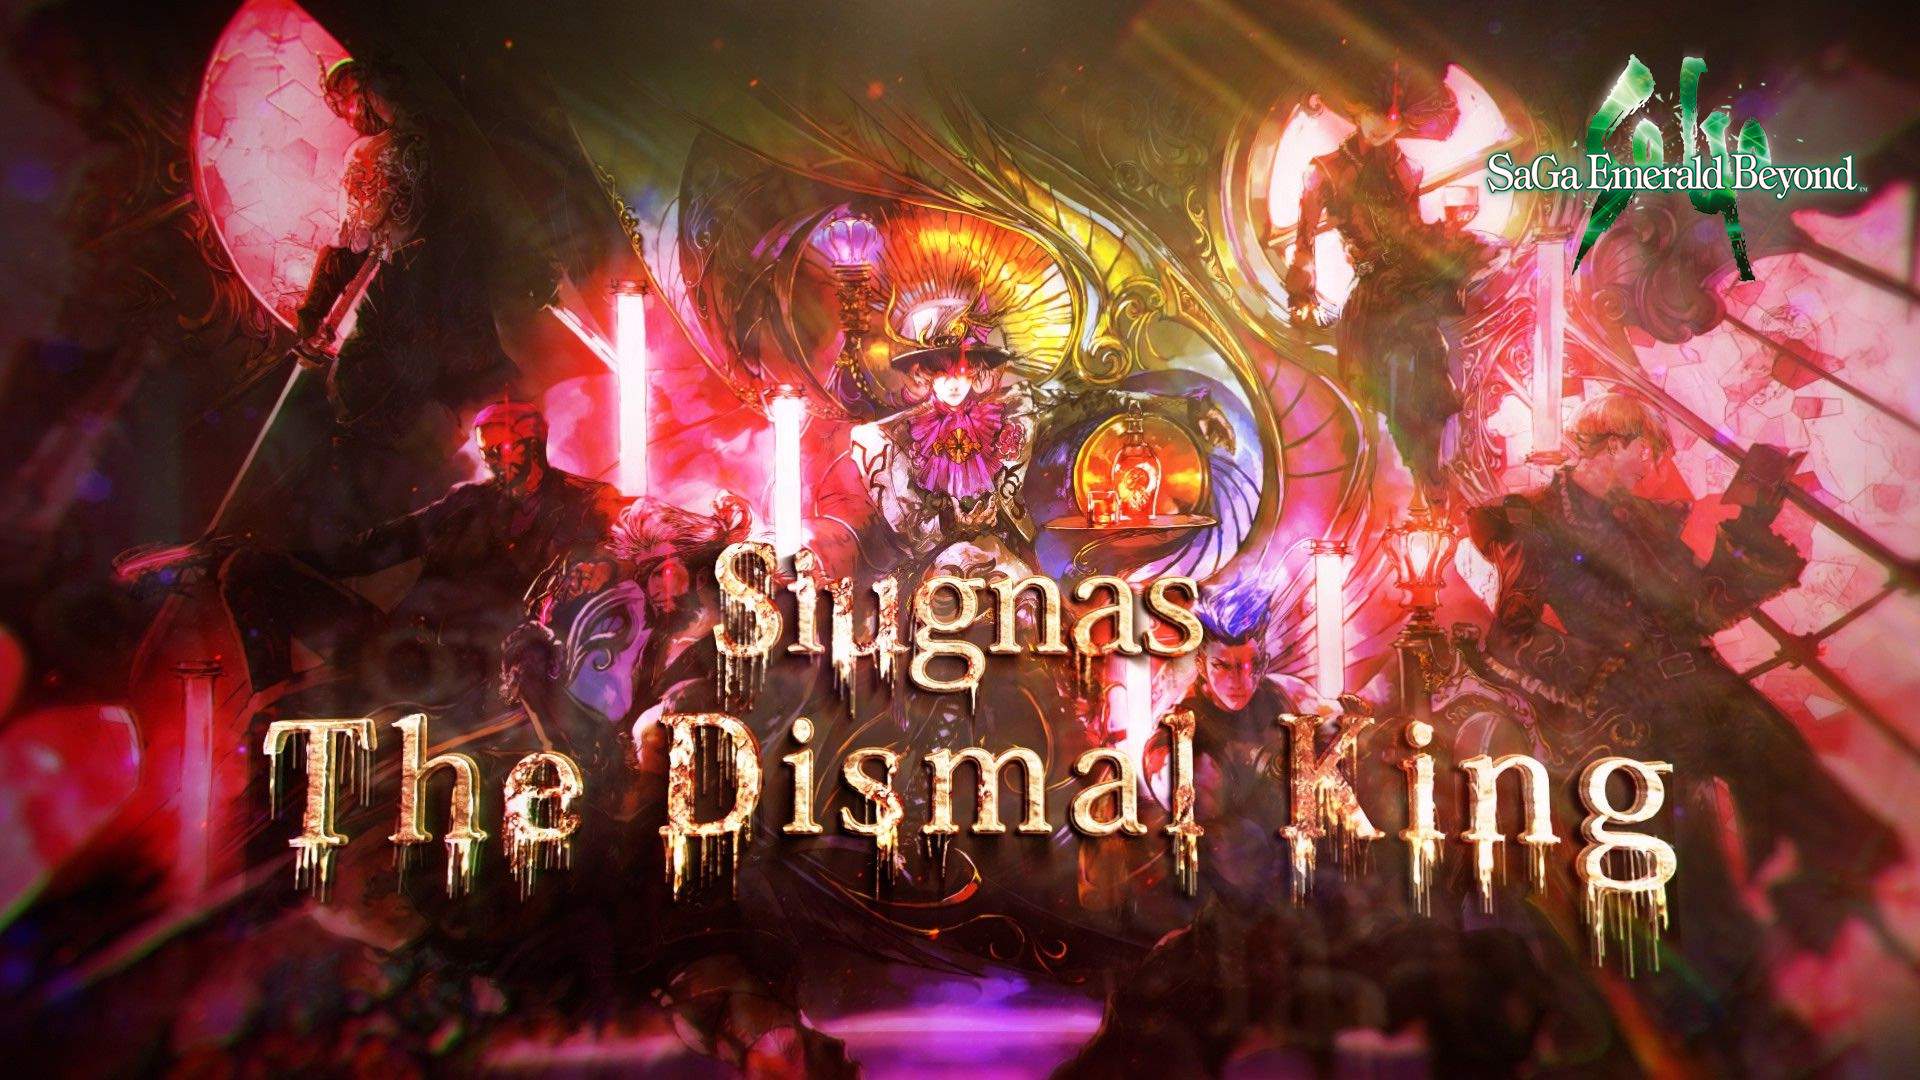 An image of Siugnas and text: Siugnas The Dismal King